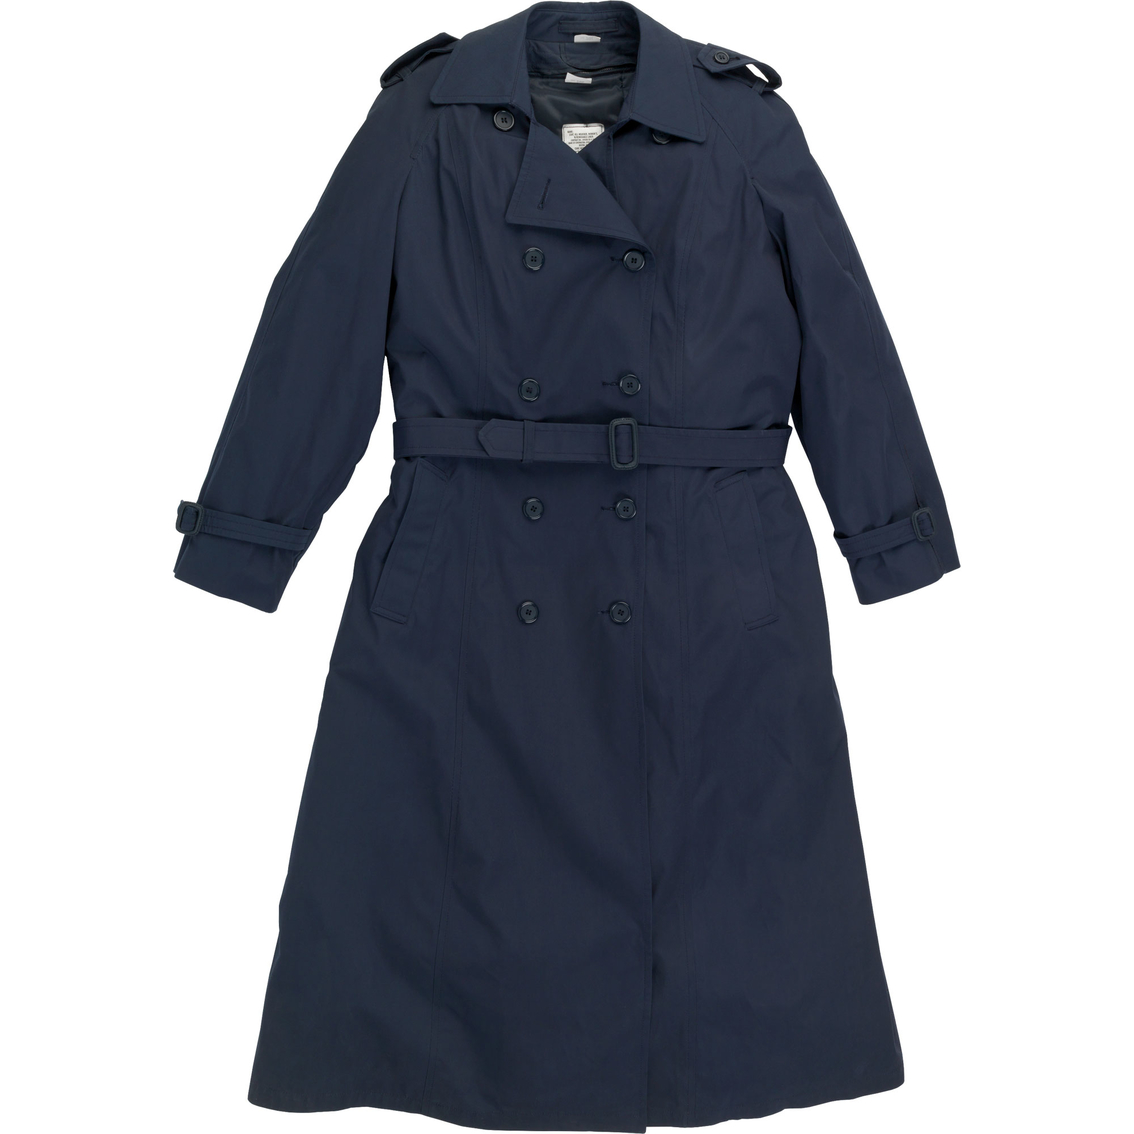 Dlats Women's Blue All Weather Coat | Uniforms | Military | Shop The ...